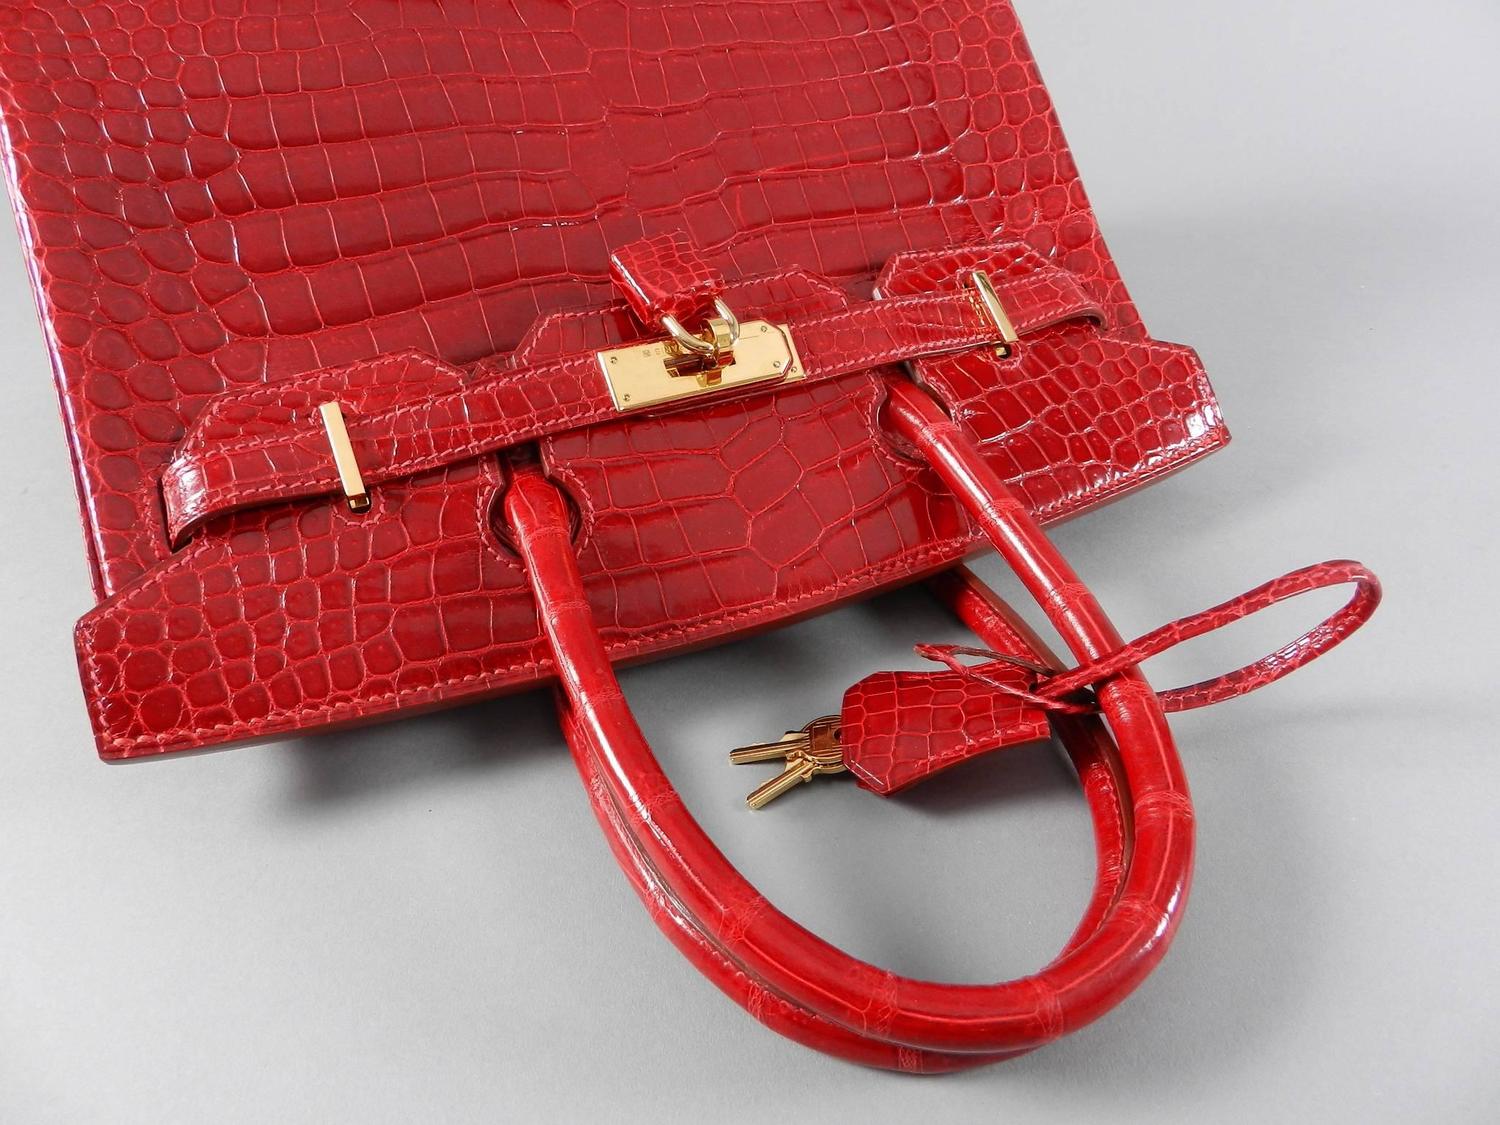 hermes bright red porosus crocodile birkin bag 30 with gold hardware, kelly purses